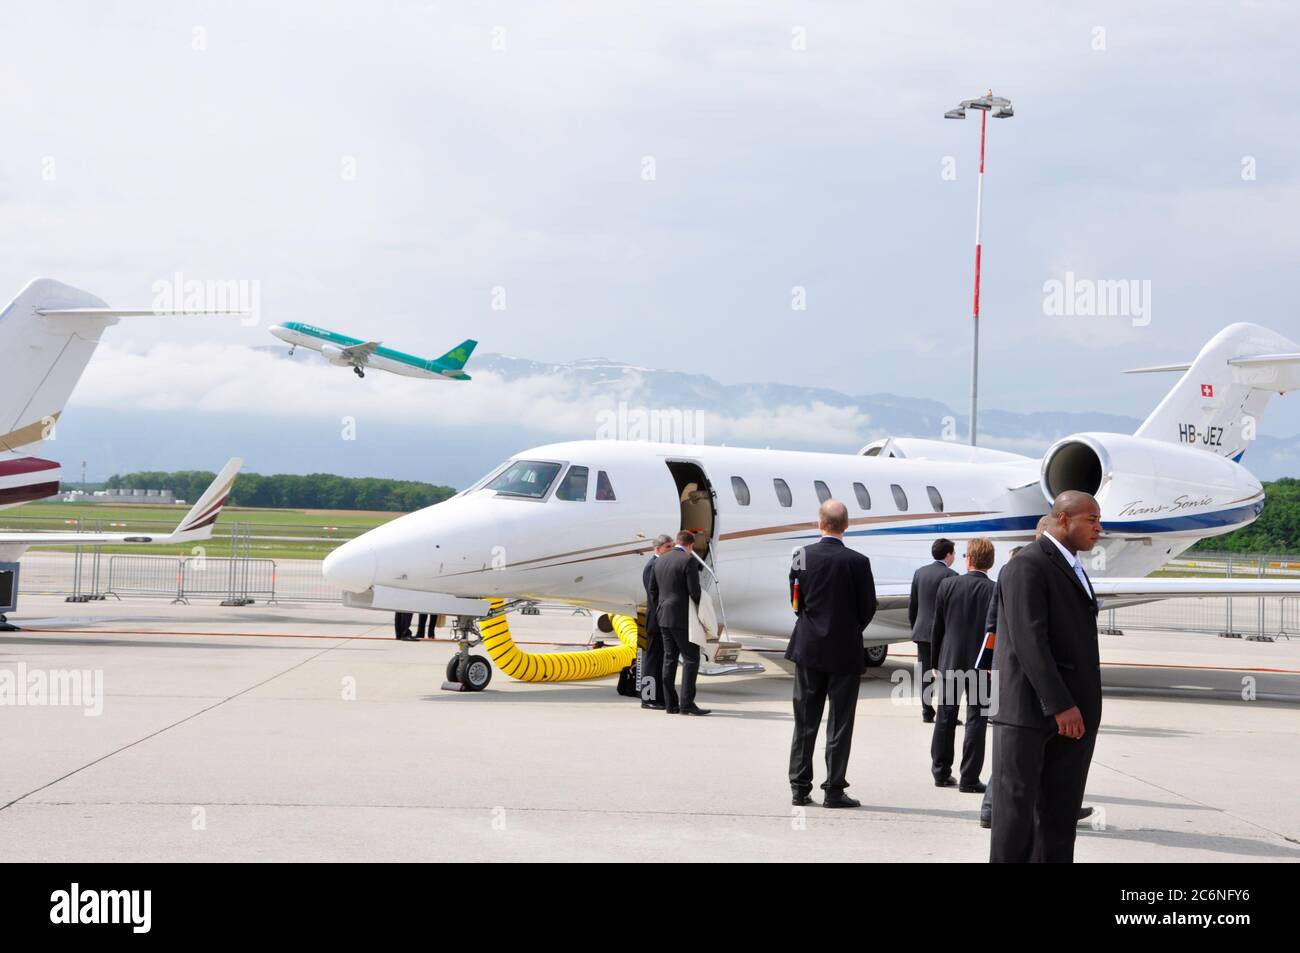 An der EBACE, le salon de l'aviation privée grösster d'Europa à Genf, zeigen Flugzeughersteller ihre neusten Business-Jets auf dem Rollfeld des Genfer Flugh Banque D'Images